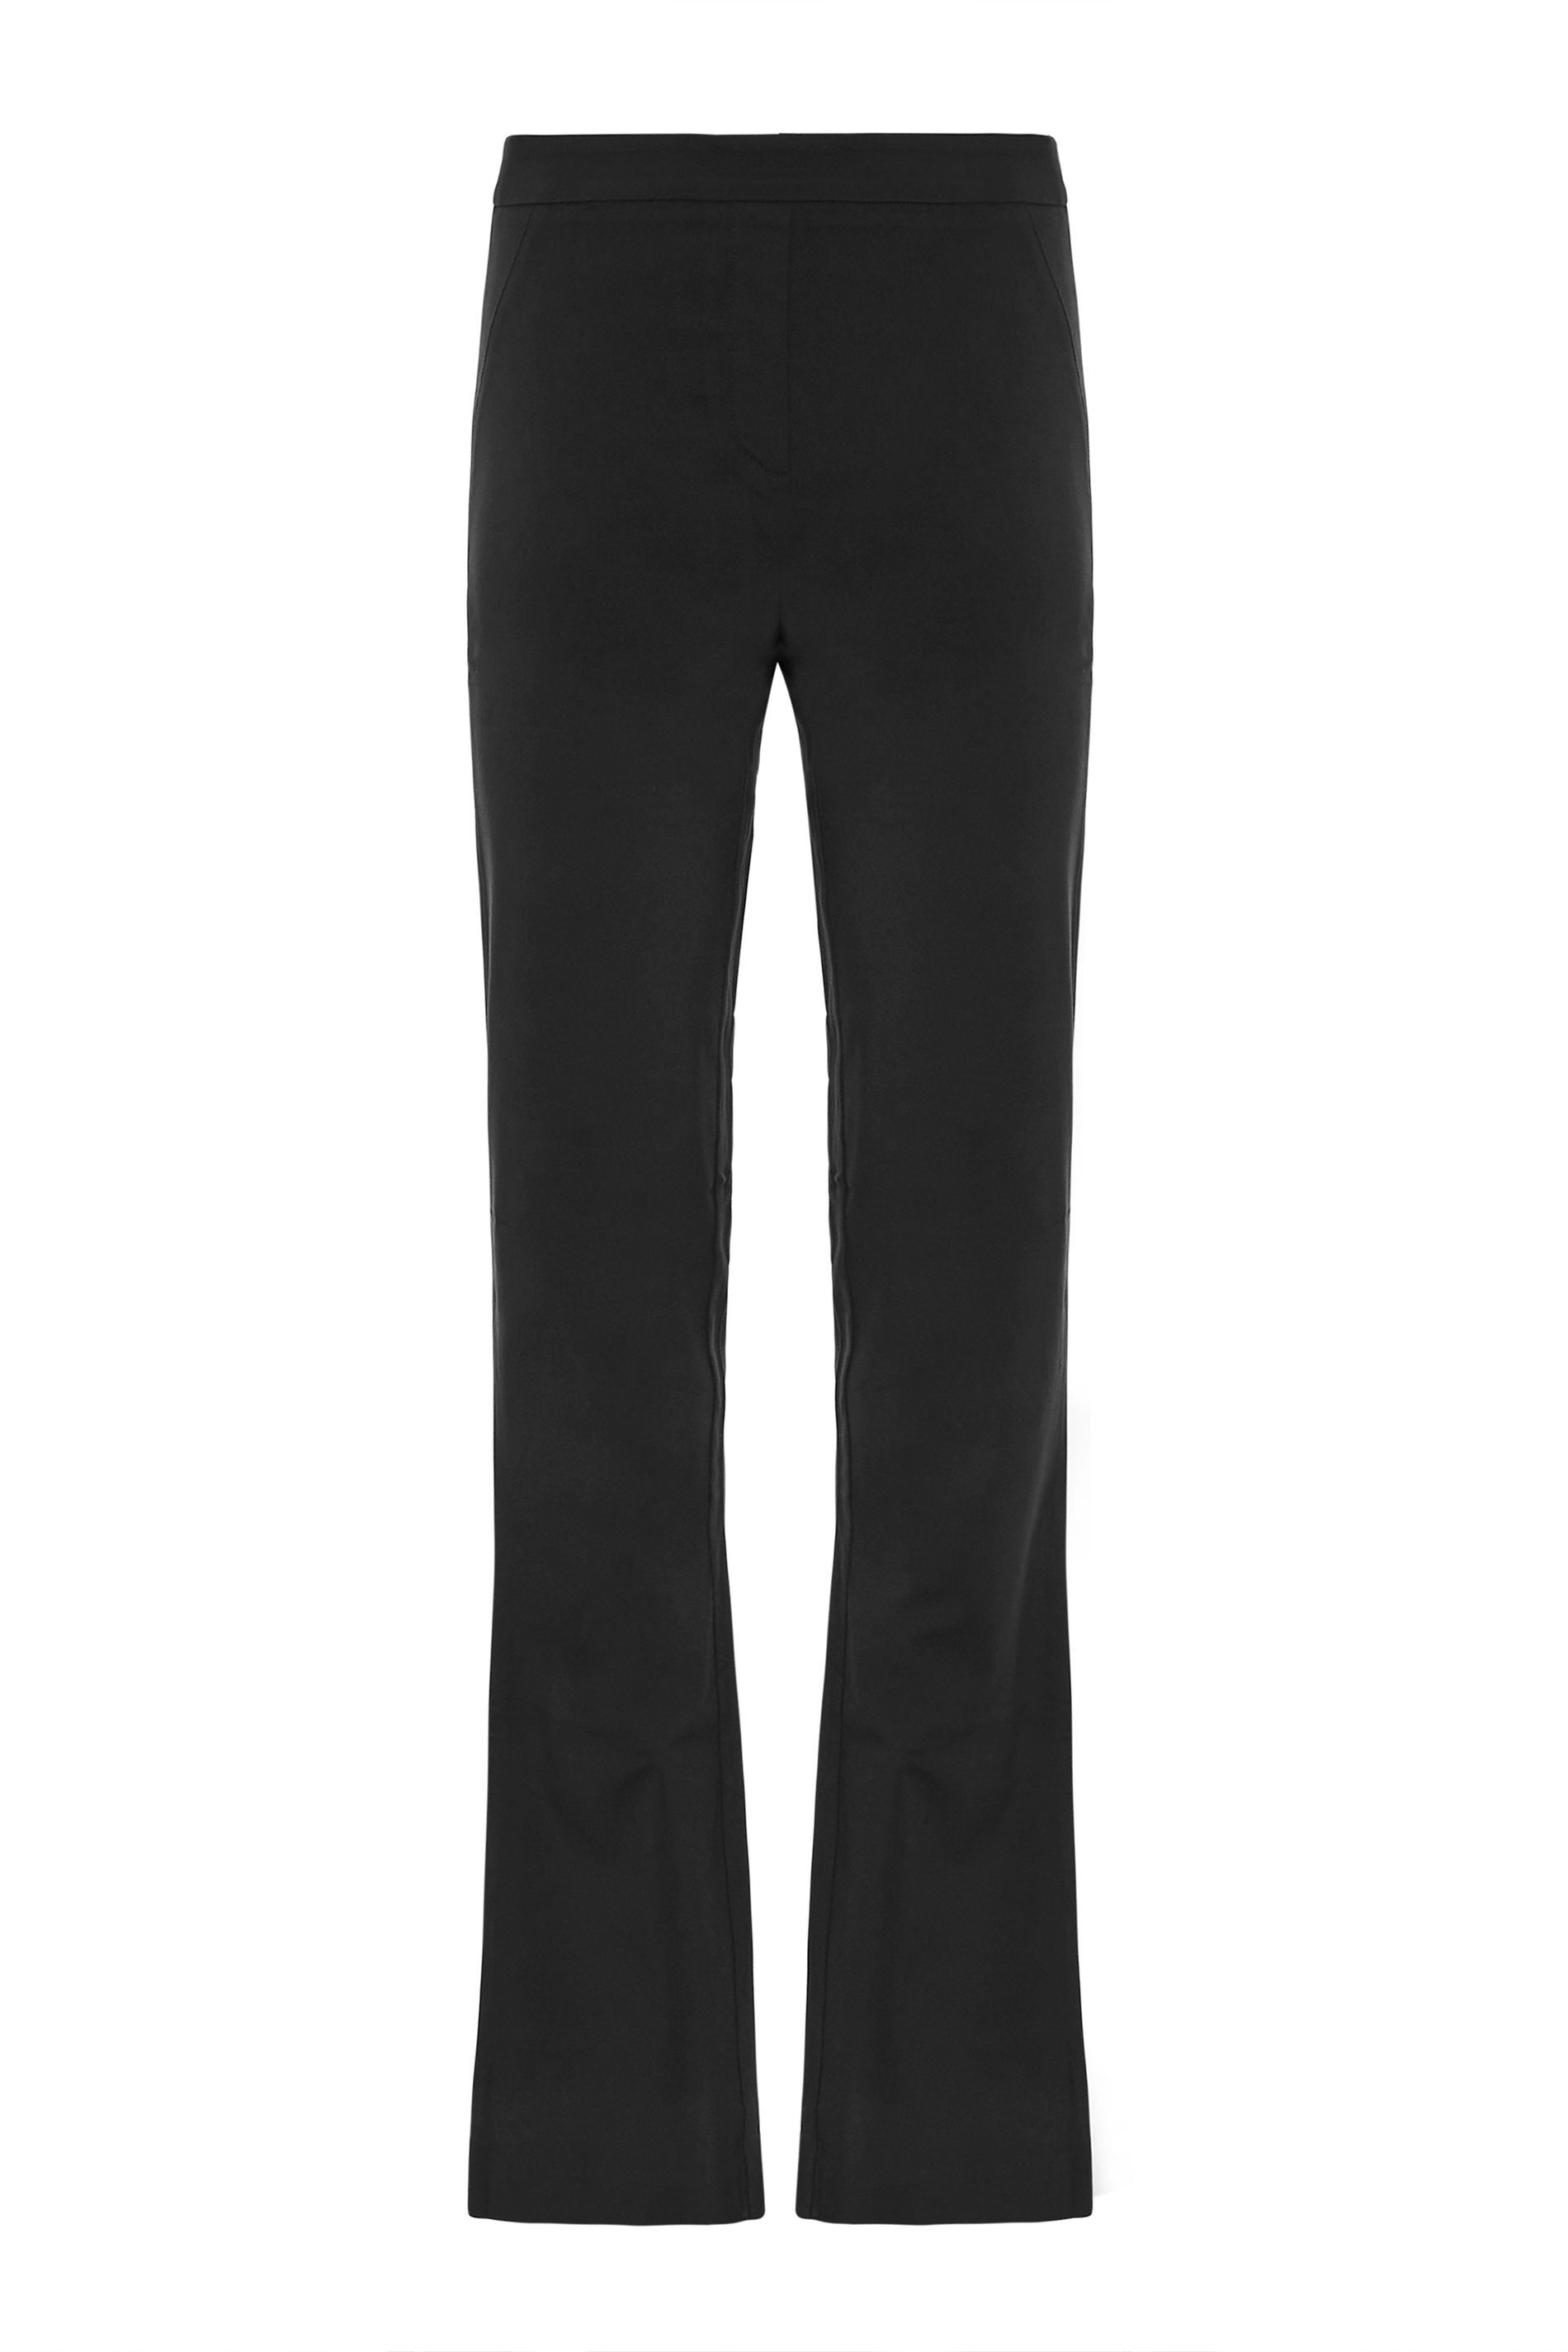 LTS Tall Women's Black Bootcut Trousers | Long Tall Sally